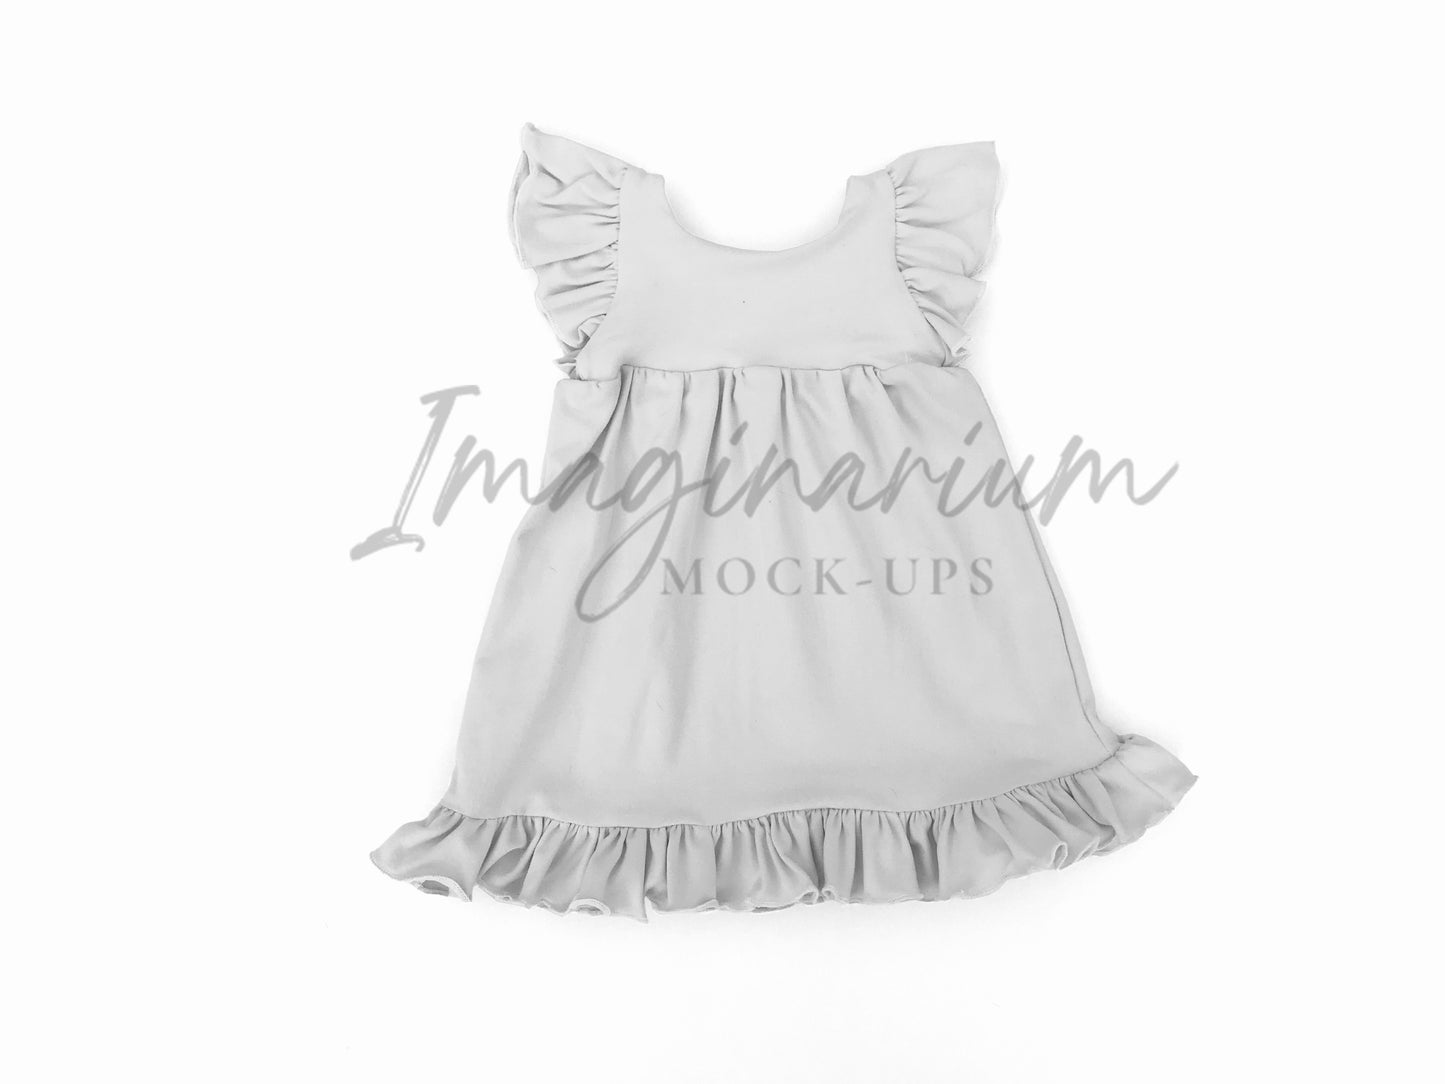 Petal Dress Sleeveless with Ruffles Mock Up, Realistic Clothing Mockup for Photoshop and Procreate